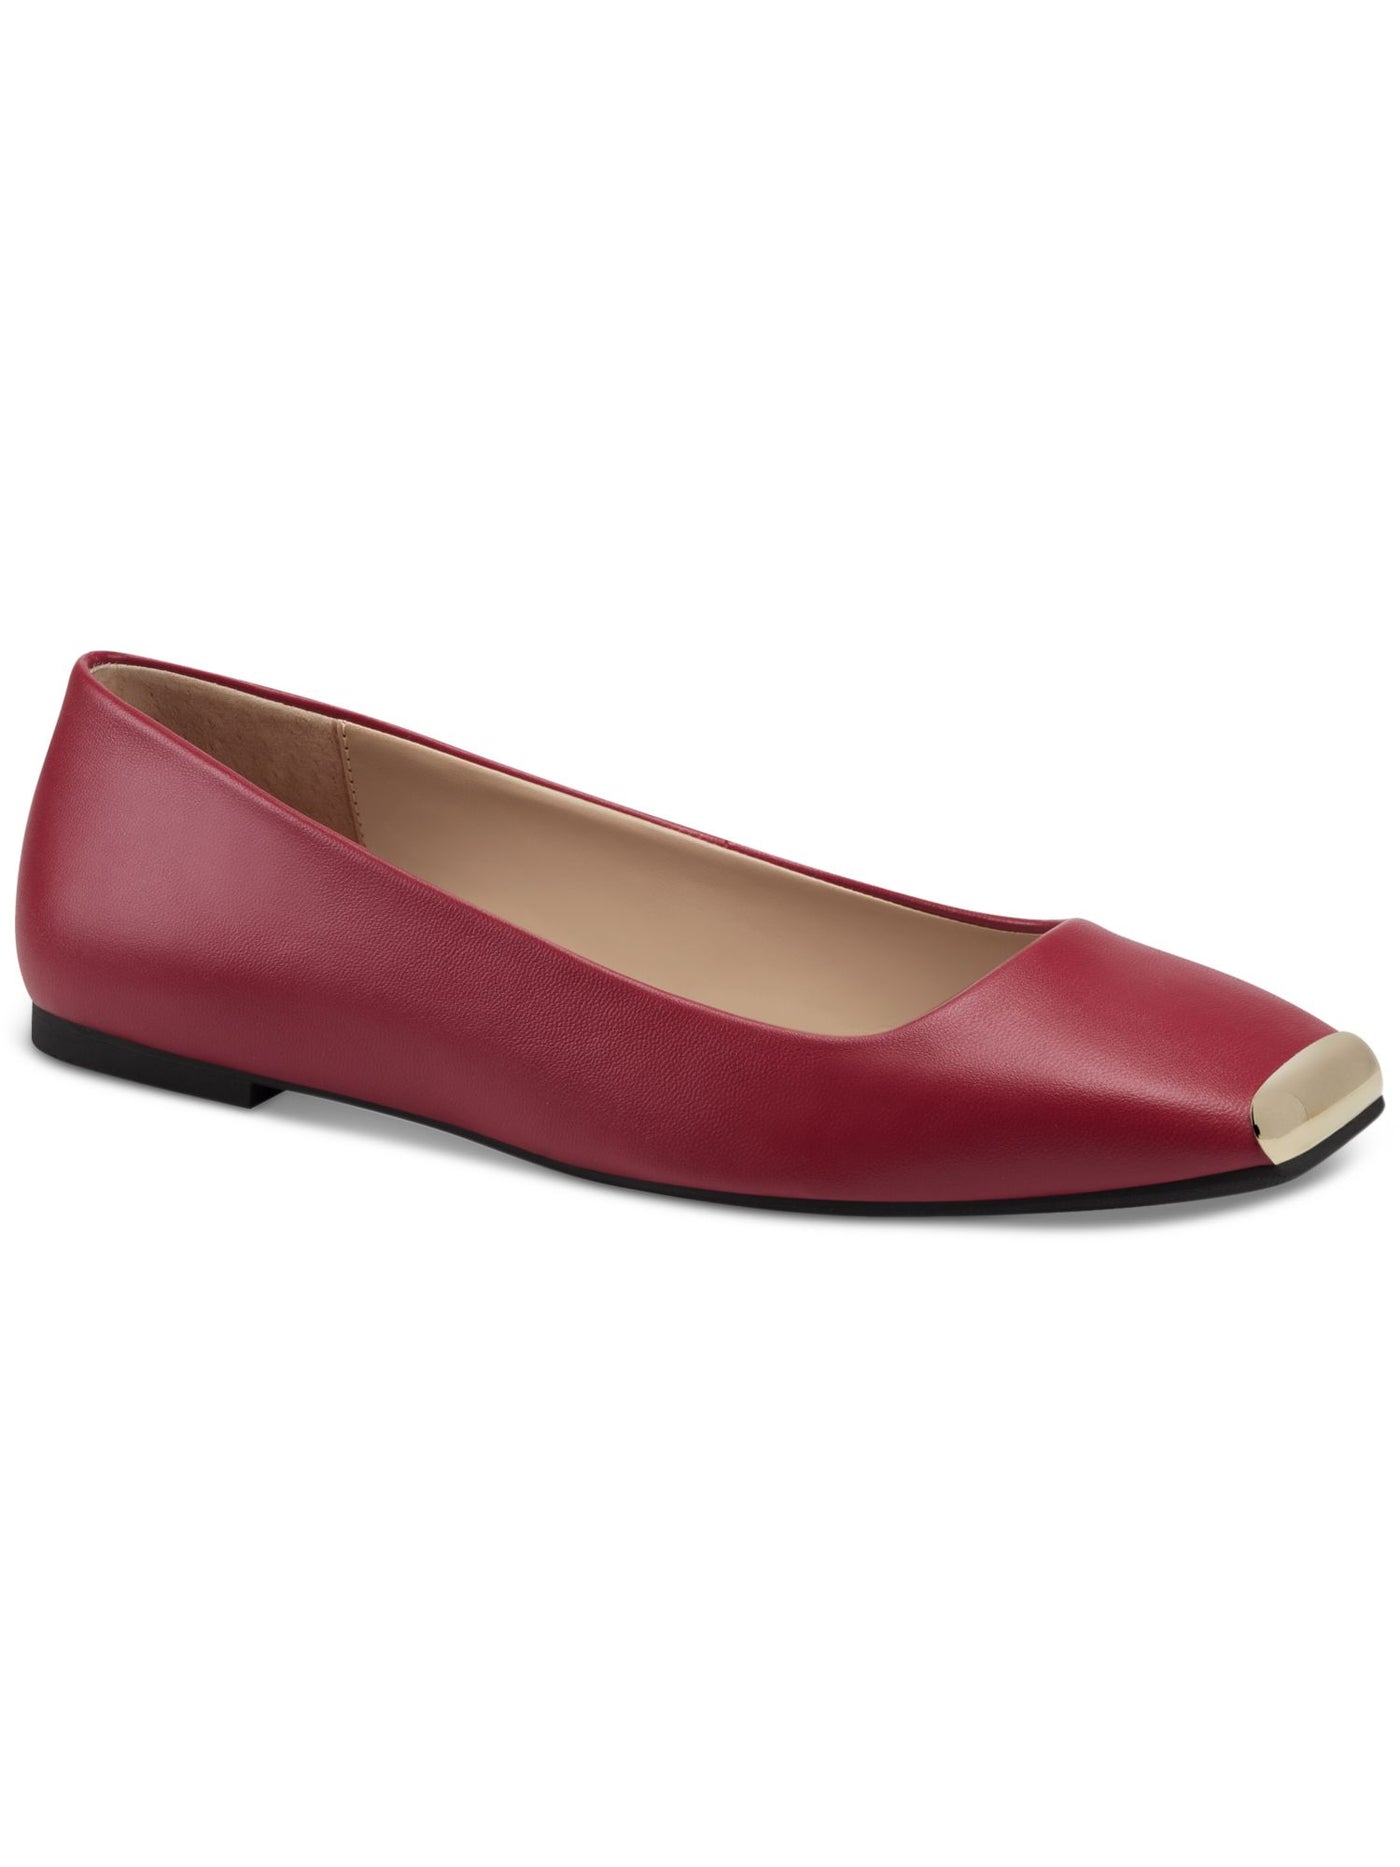 ALFANI Womens Red Flexible Sole Padded Metallic Neptoon Square Toe Block Heel Slip On Dress Flats Shoes 8.5 M